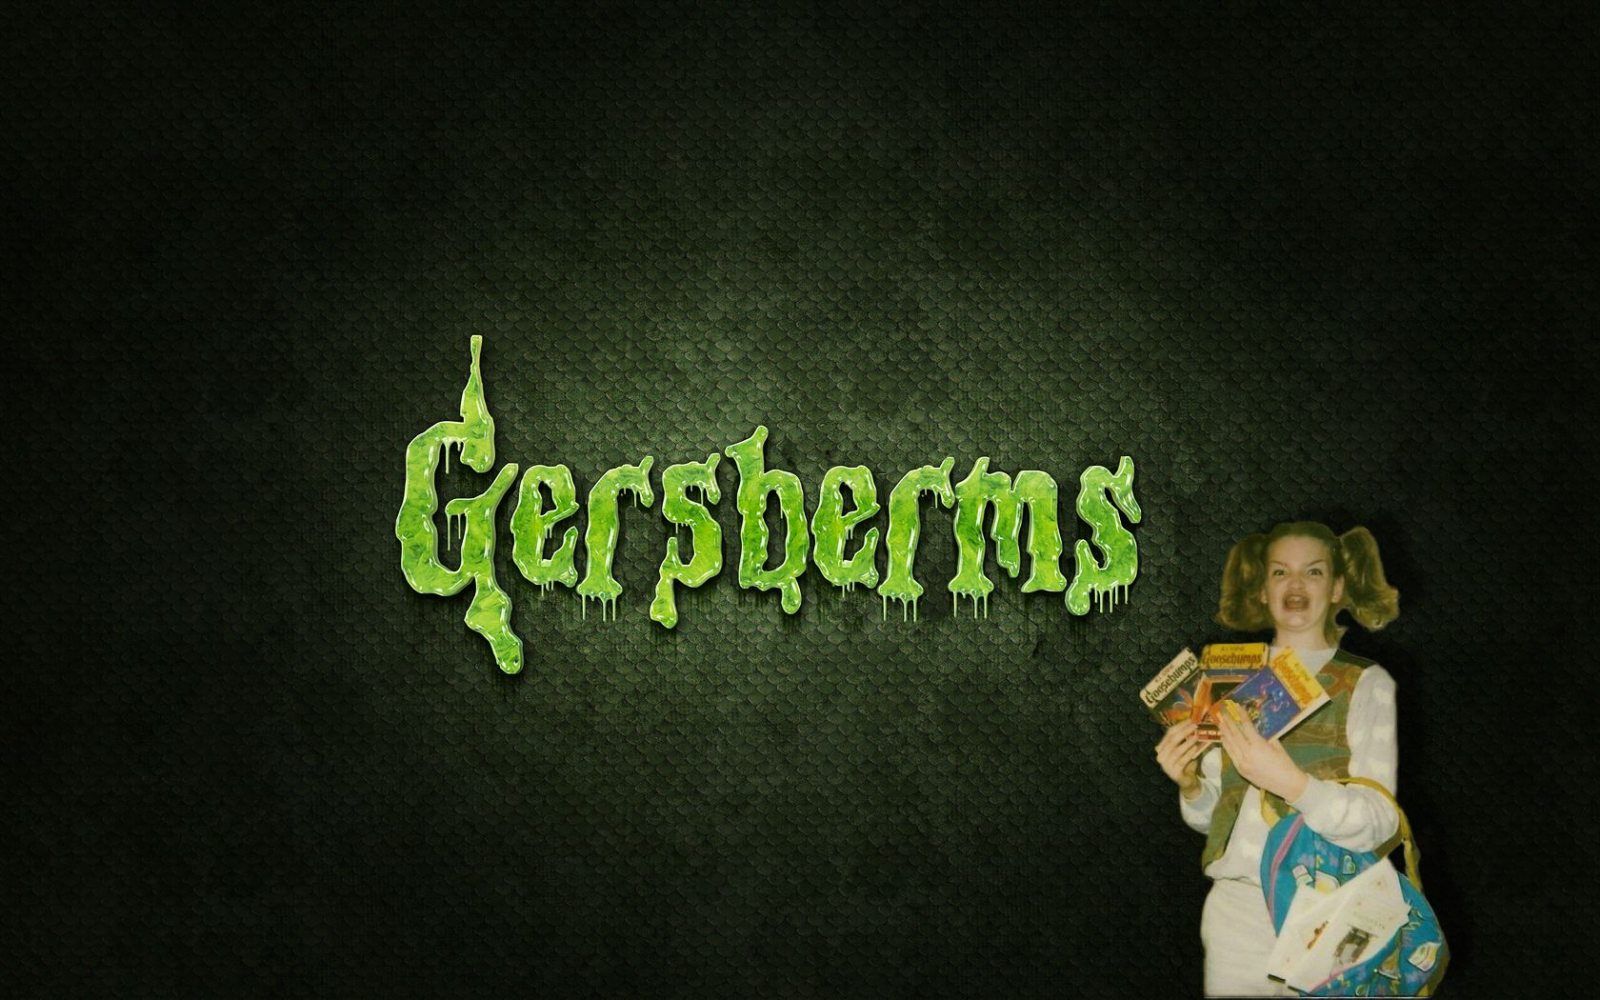 Gersberms [1600x1000] - Imgur